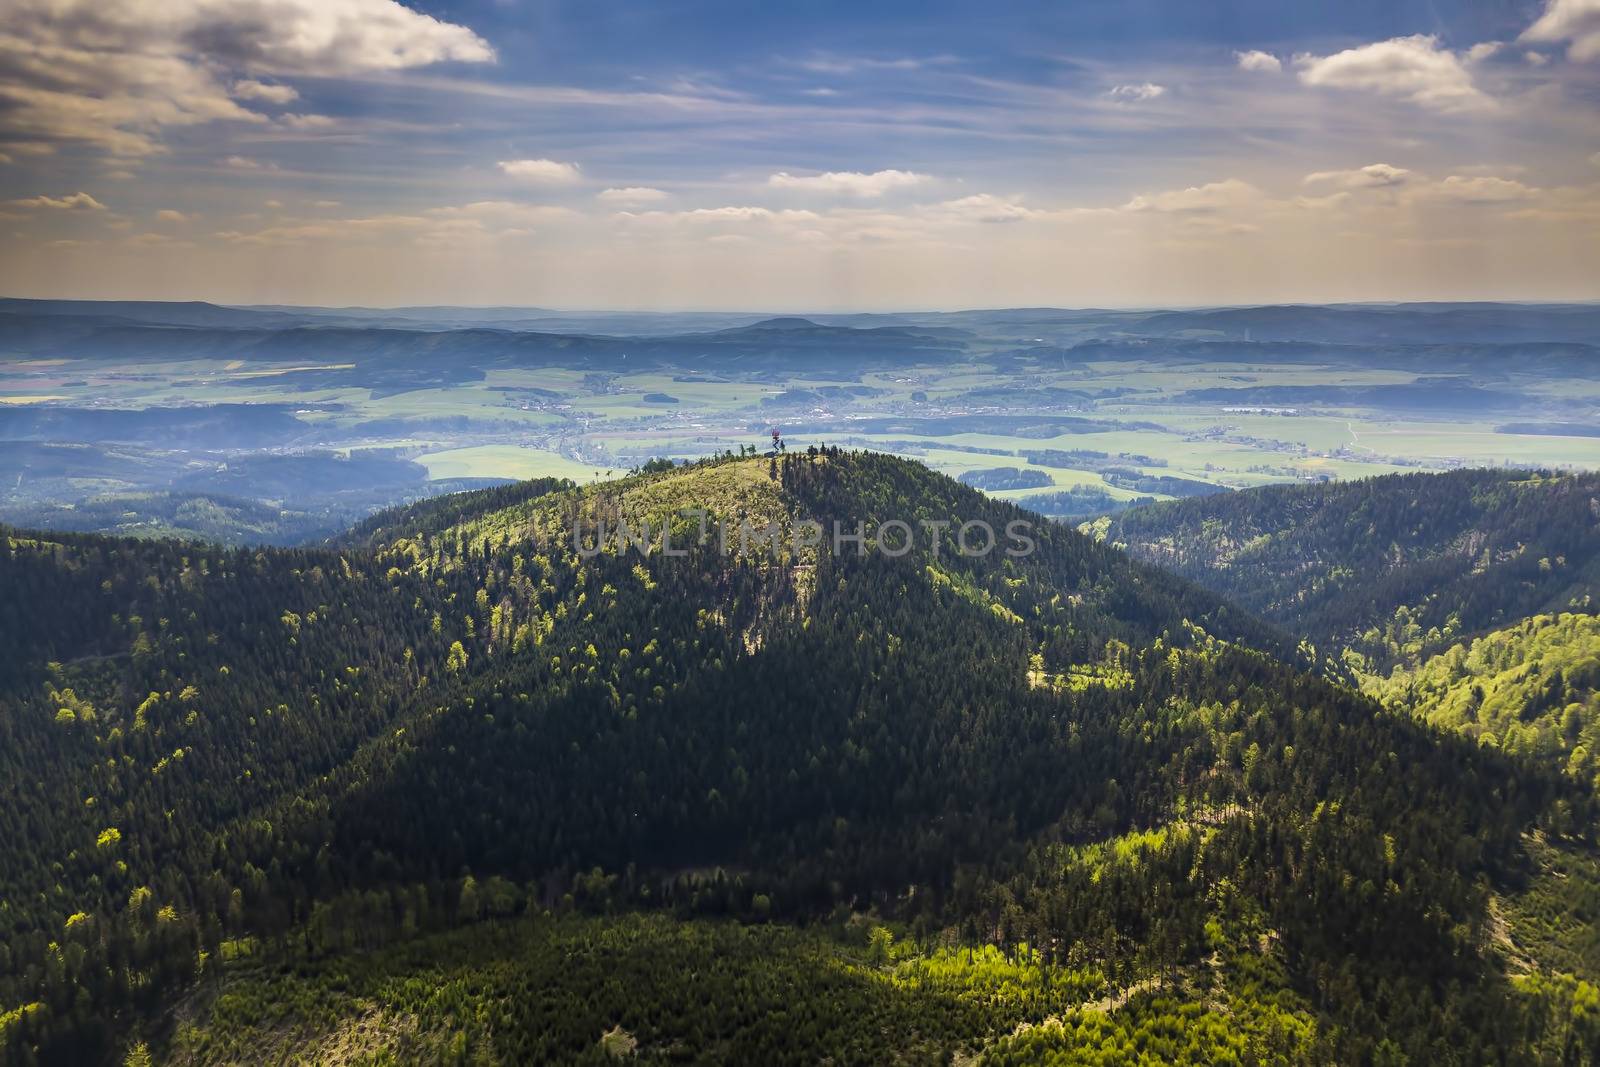 Ruprechticky Spicak Mountain - Suche Mountains in Sudetes Poland